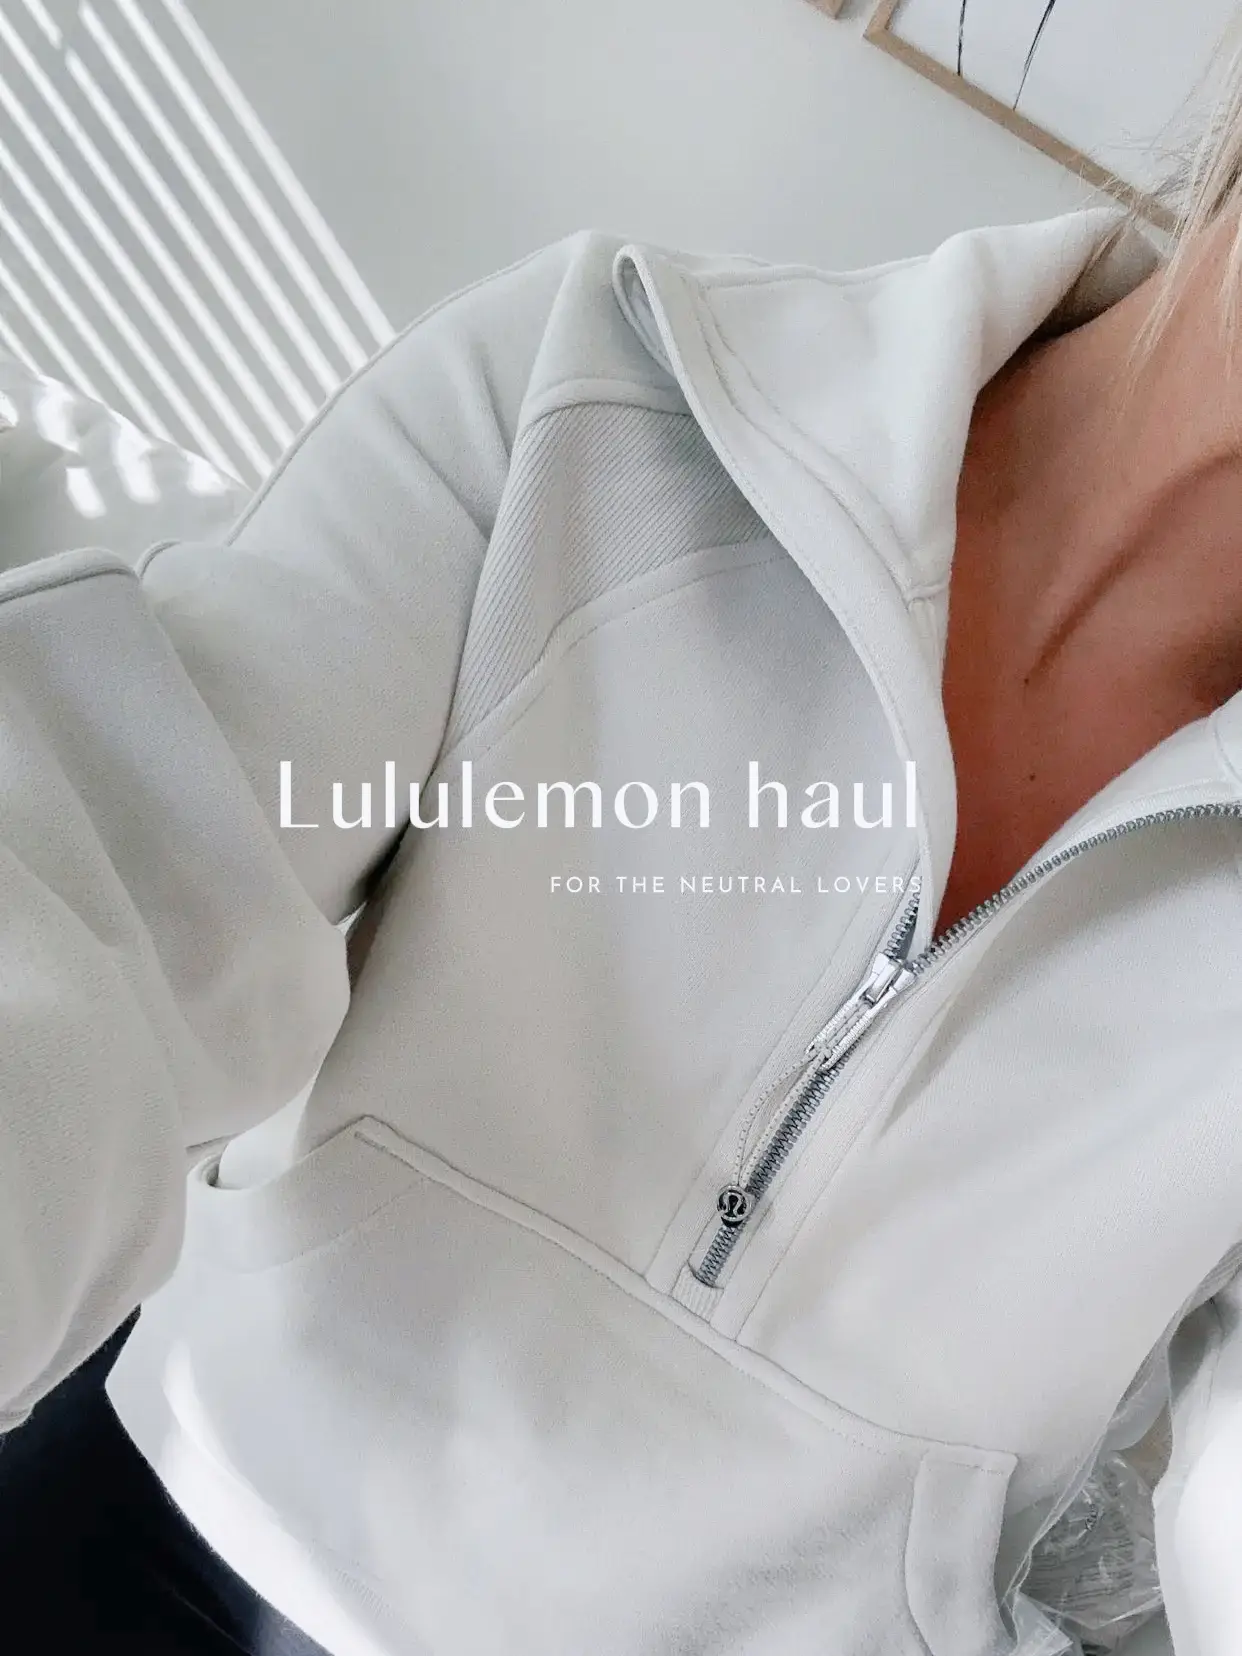 Lululemon Scuba Oversized Half-Zip Hoodie Pink Size XL - $202 - From hannah